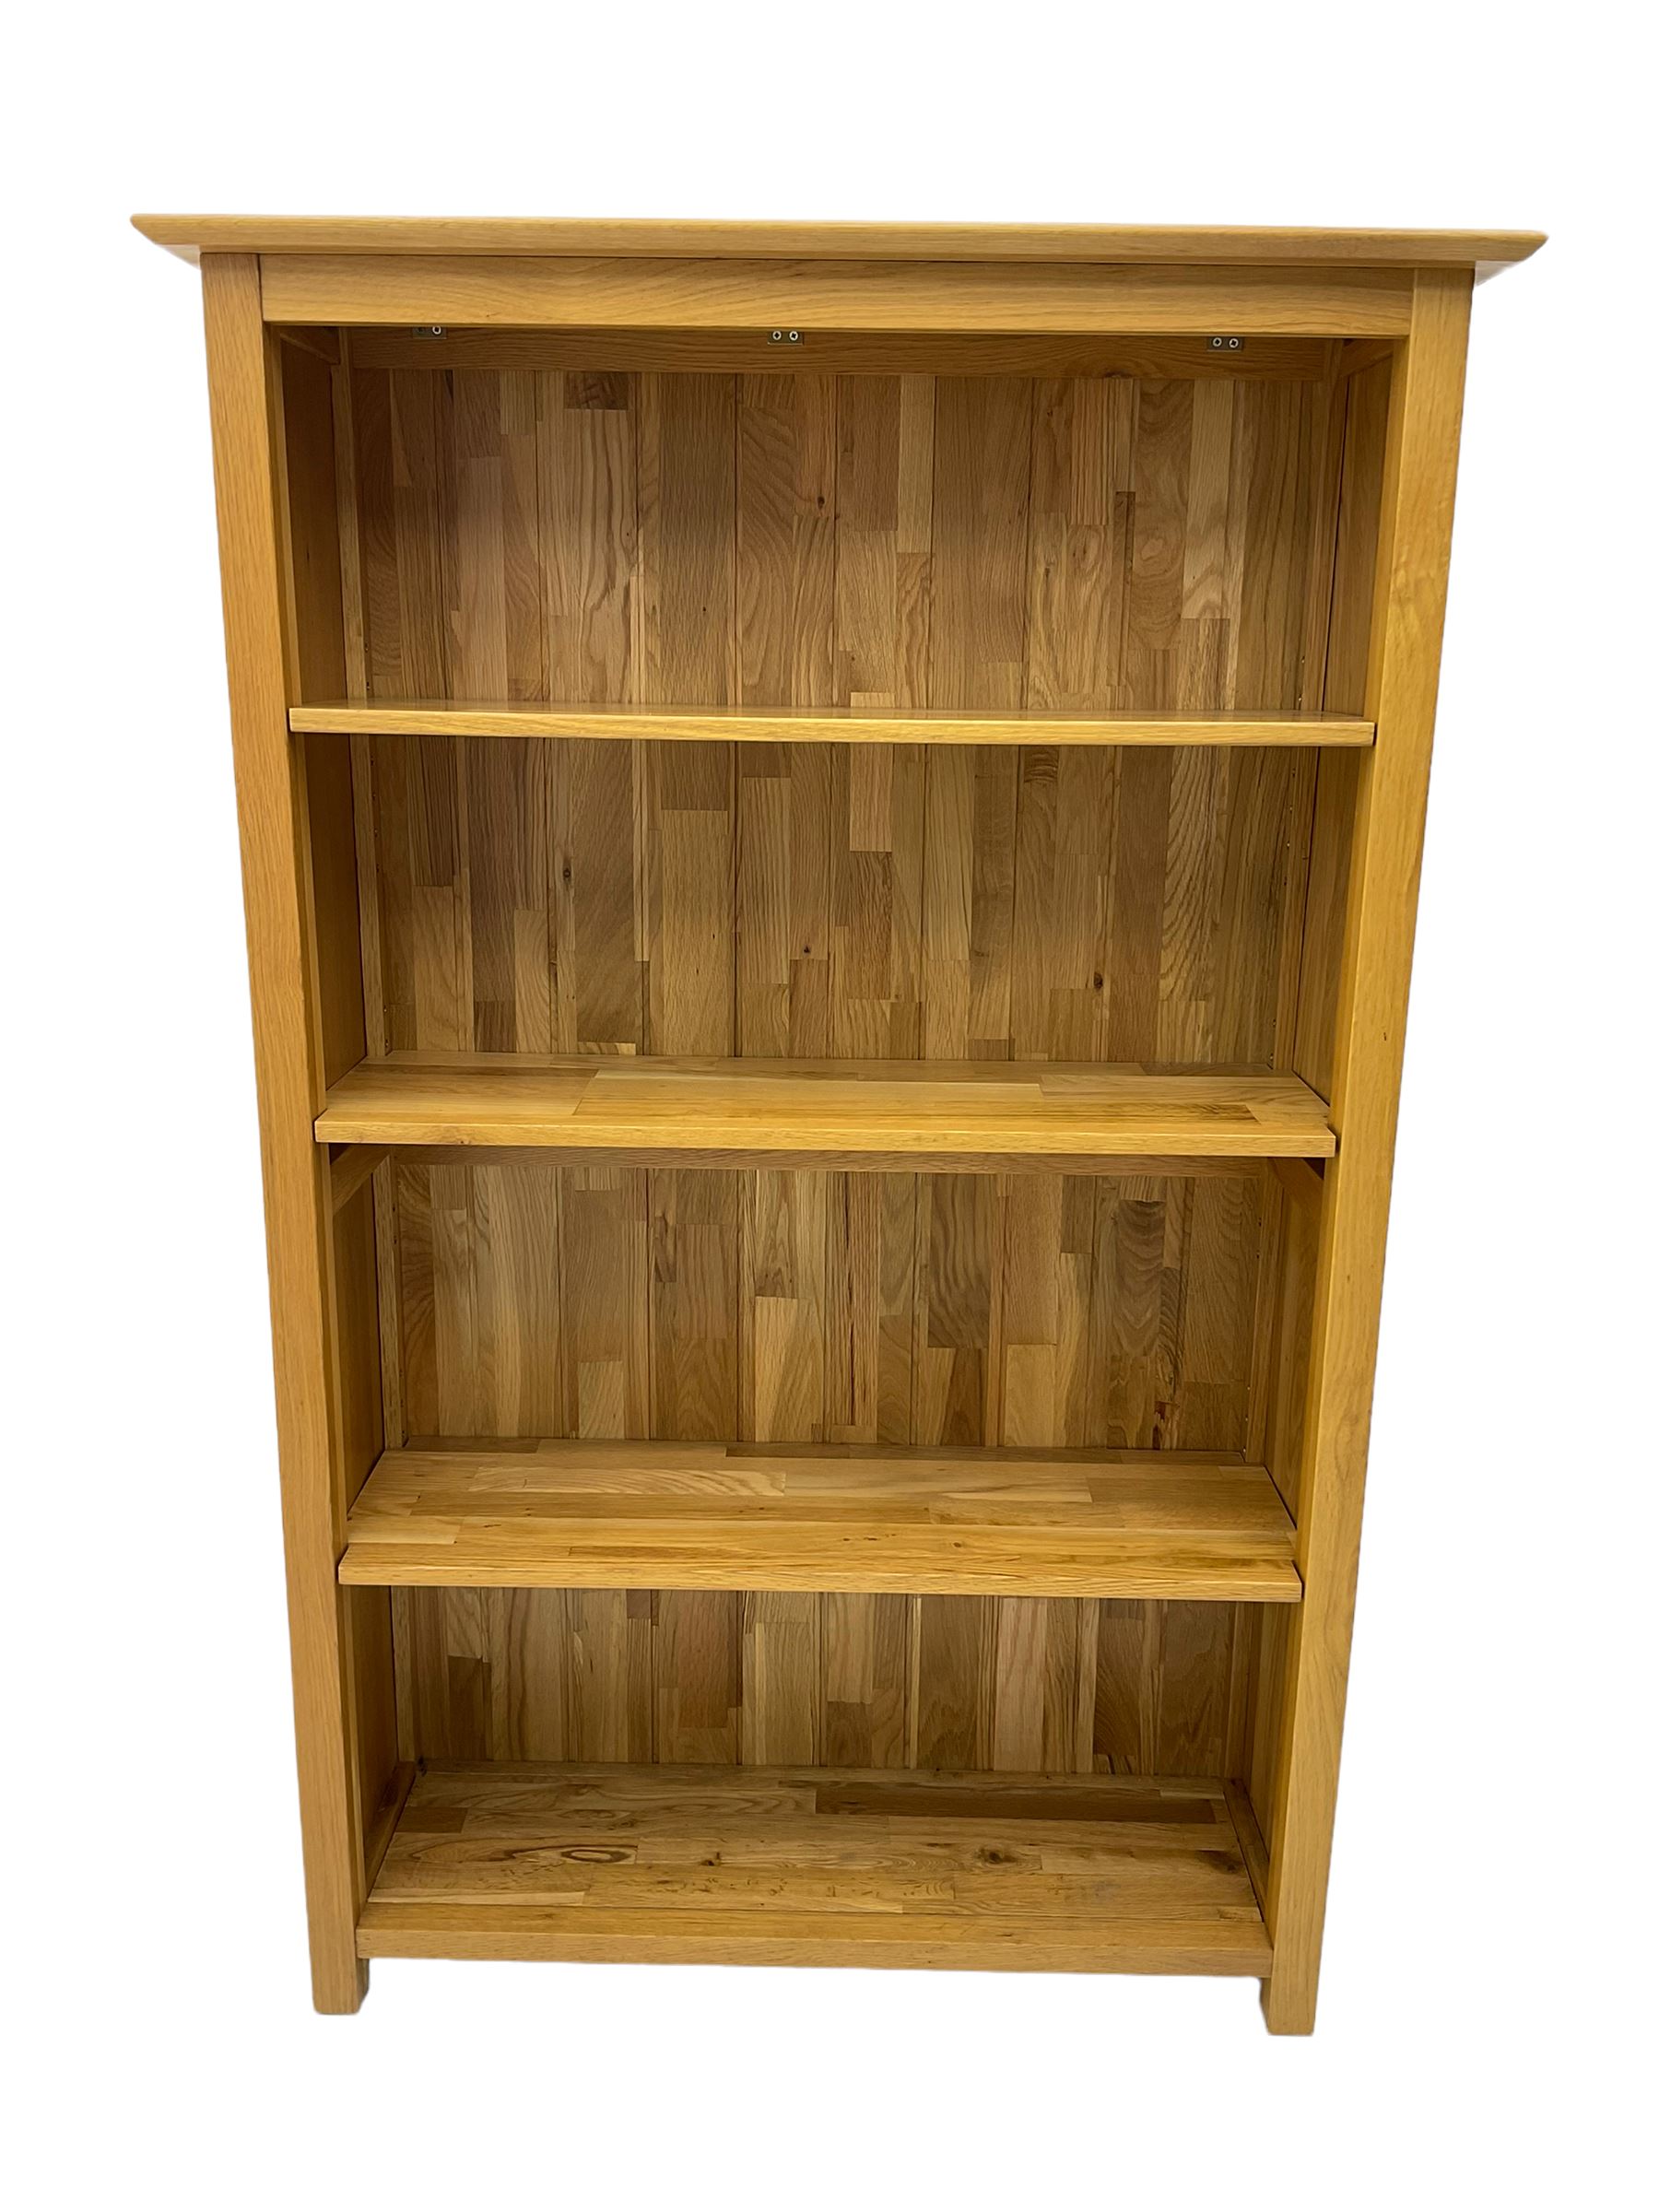 Light oak bookcase with three adjustable shelves